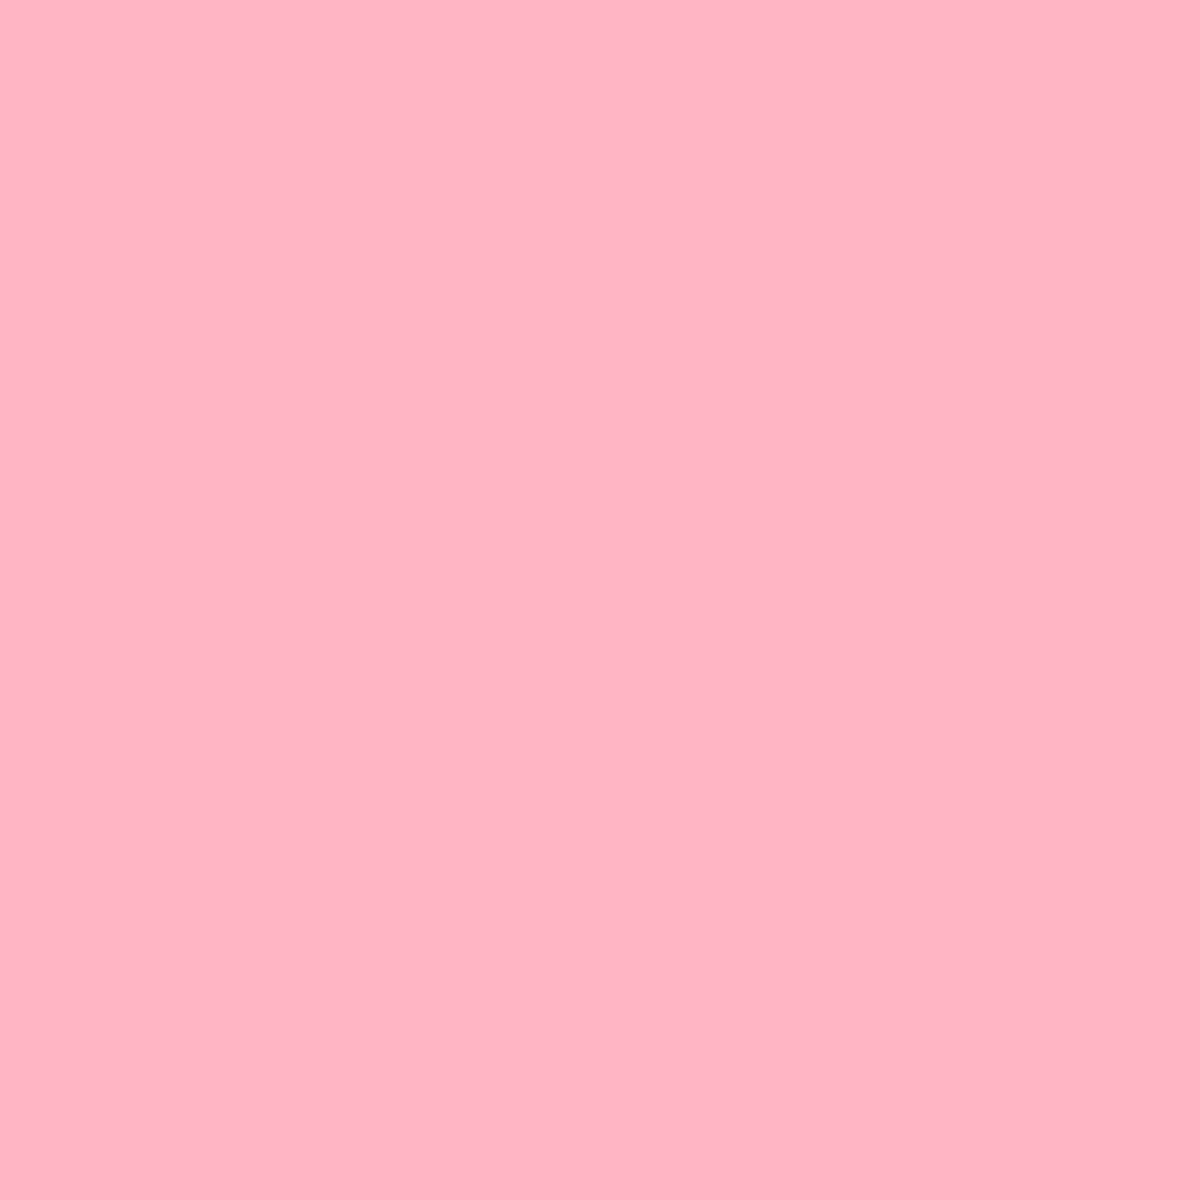 aesthetic-light-pink-background-2048-x-2048-re94c19juz508qdl